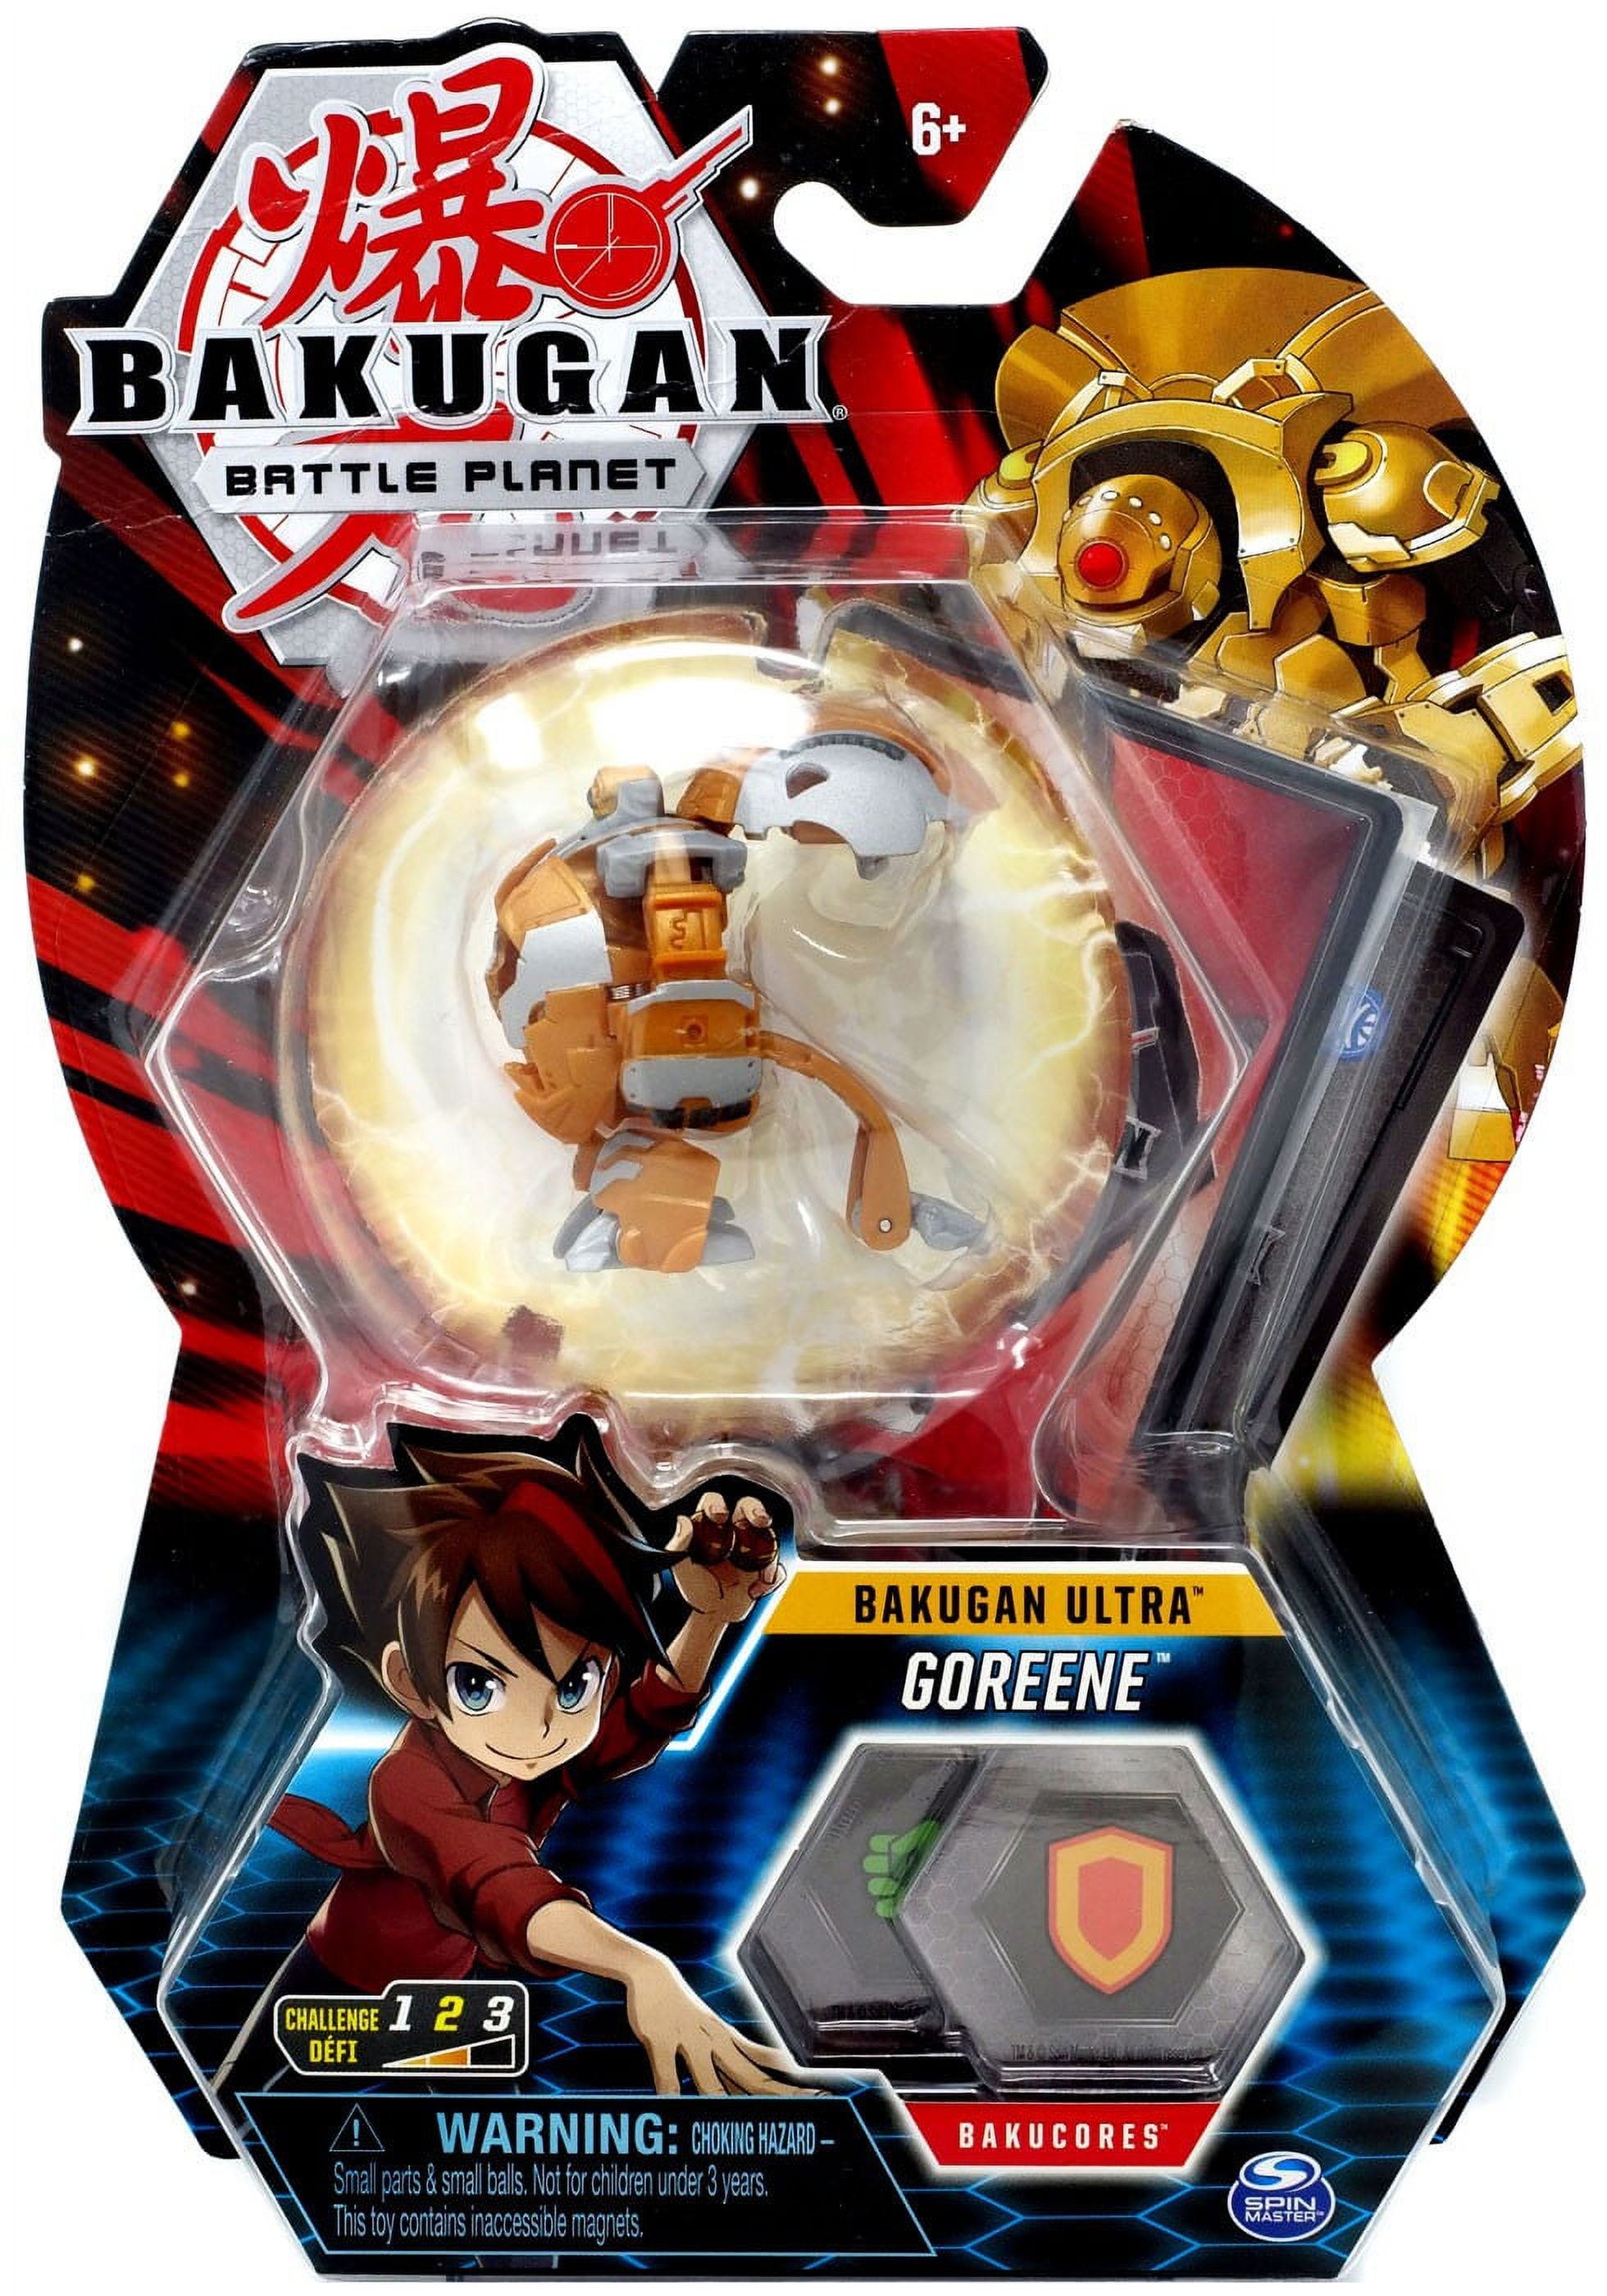 Bakugan battle planet